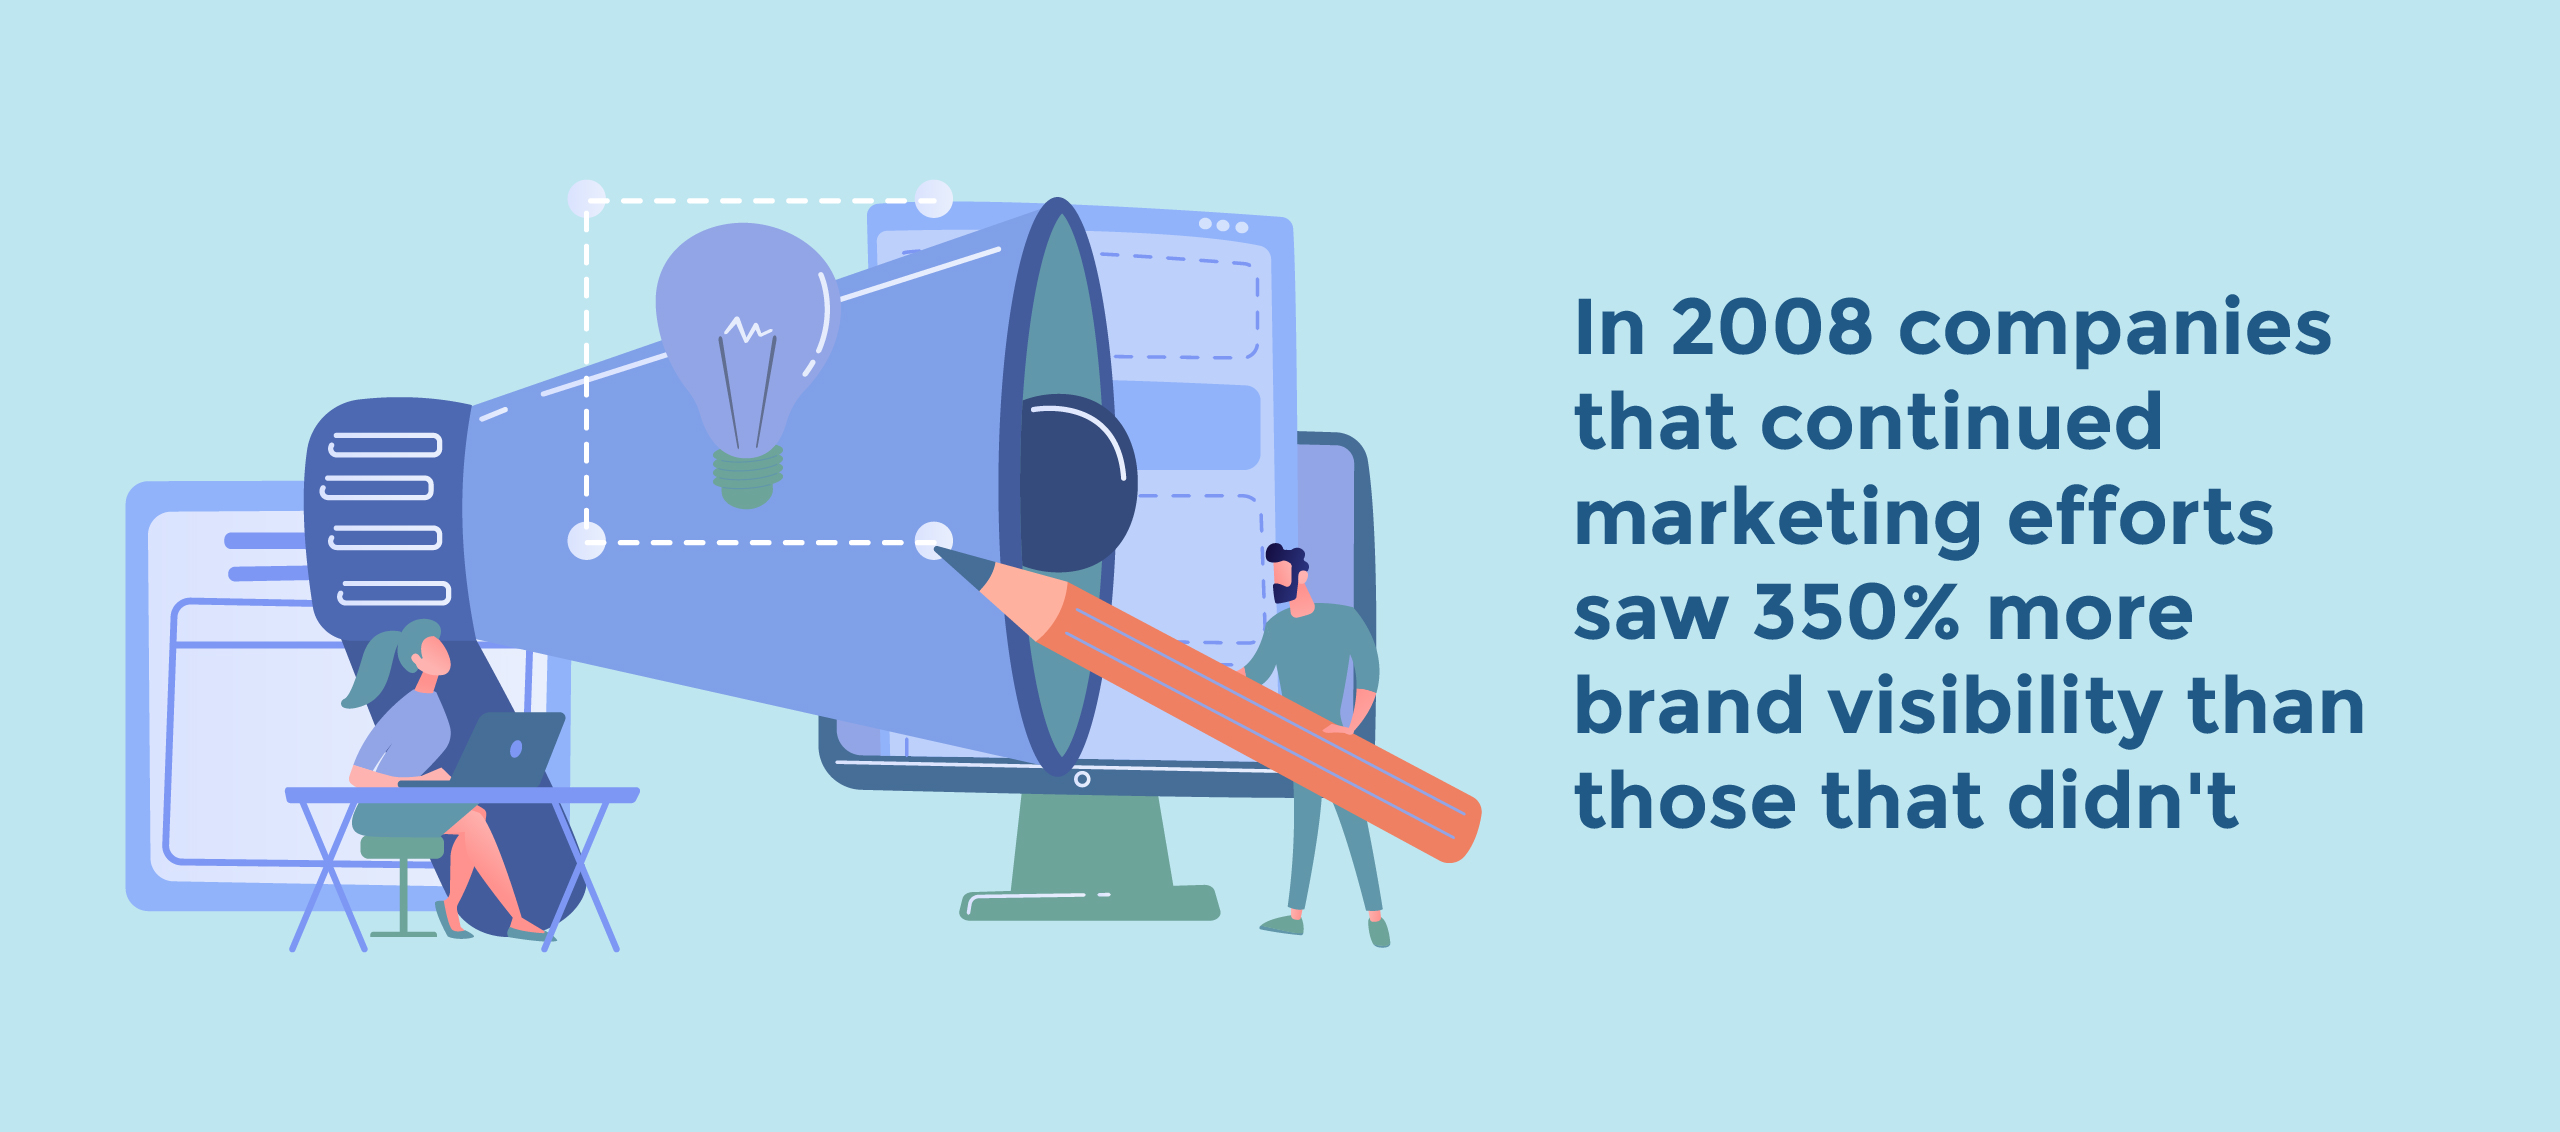 2008 stats on marketing